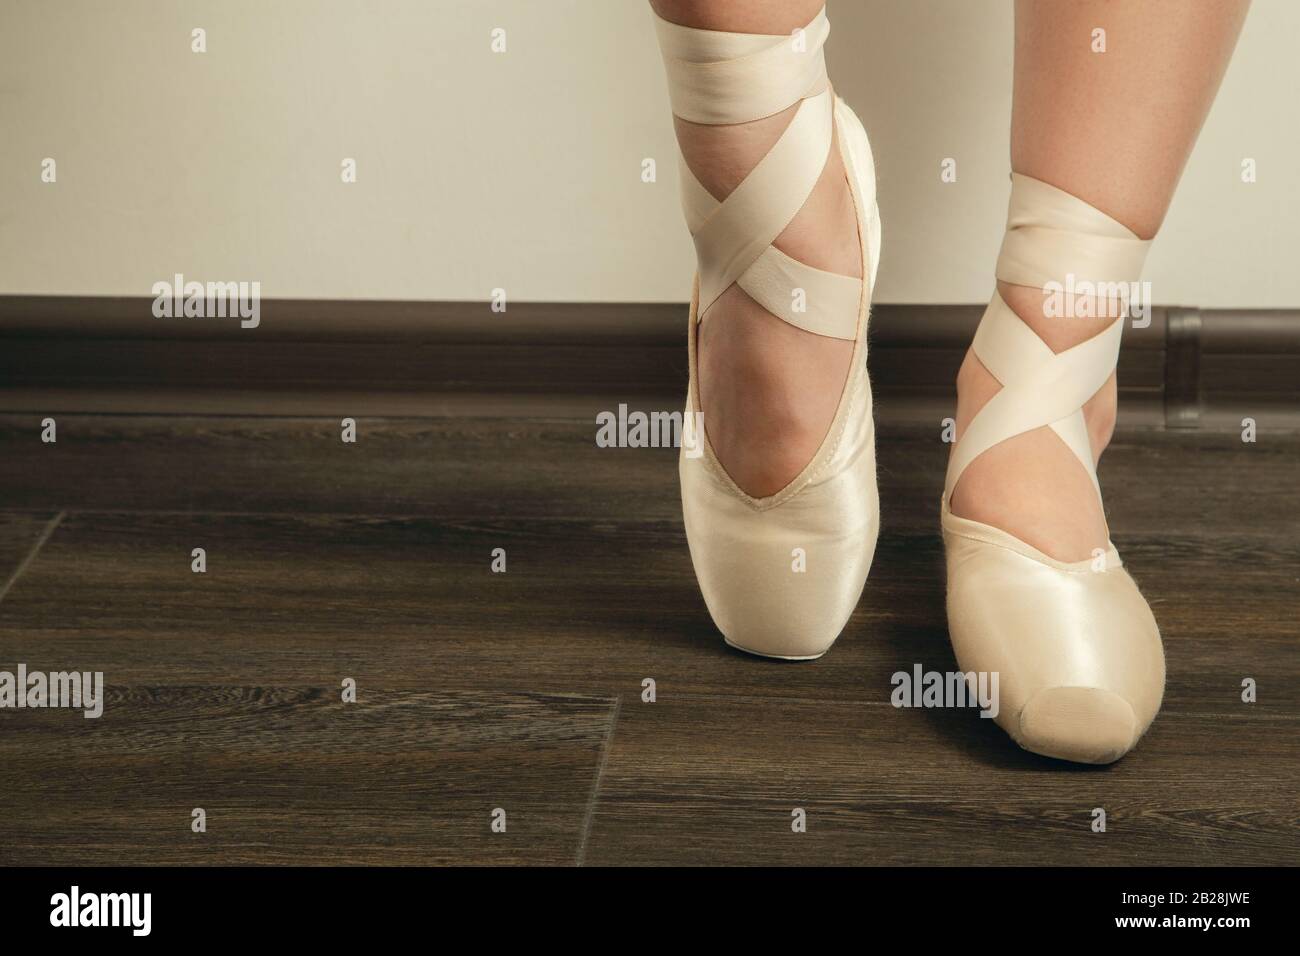 female ballerina feet in pointes on a wooden floor closeup image Stock Photo